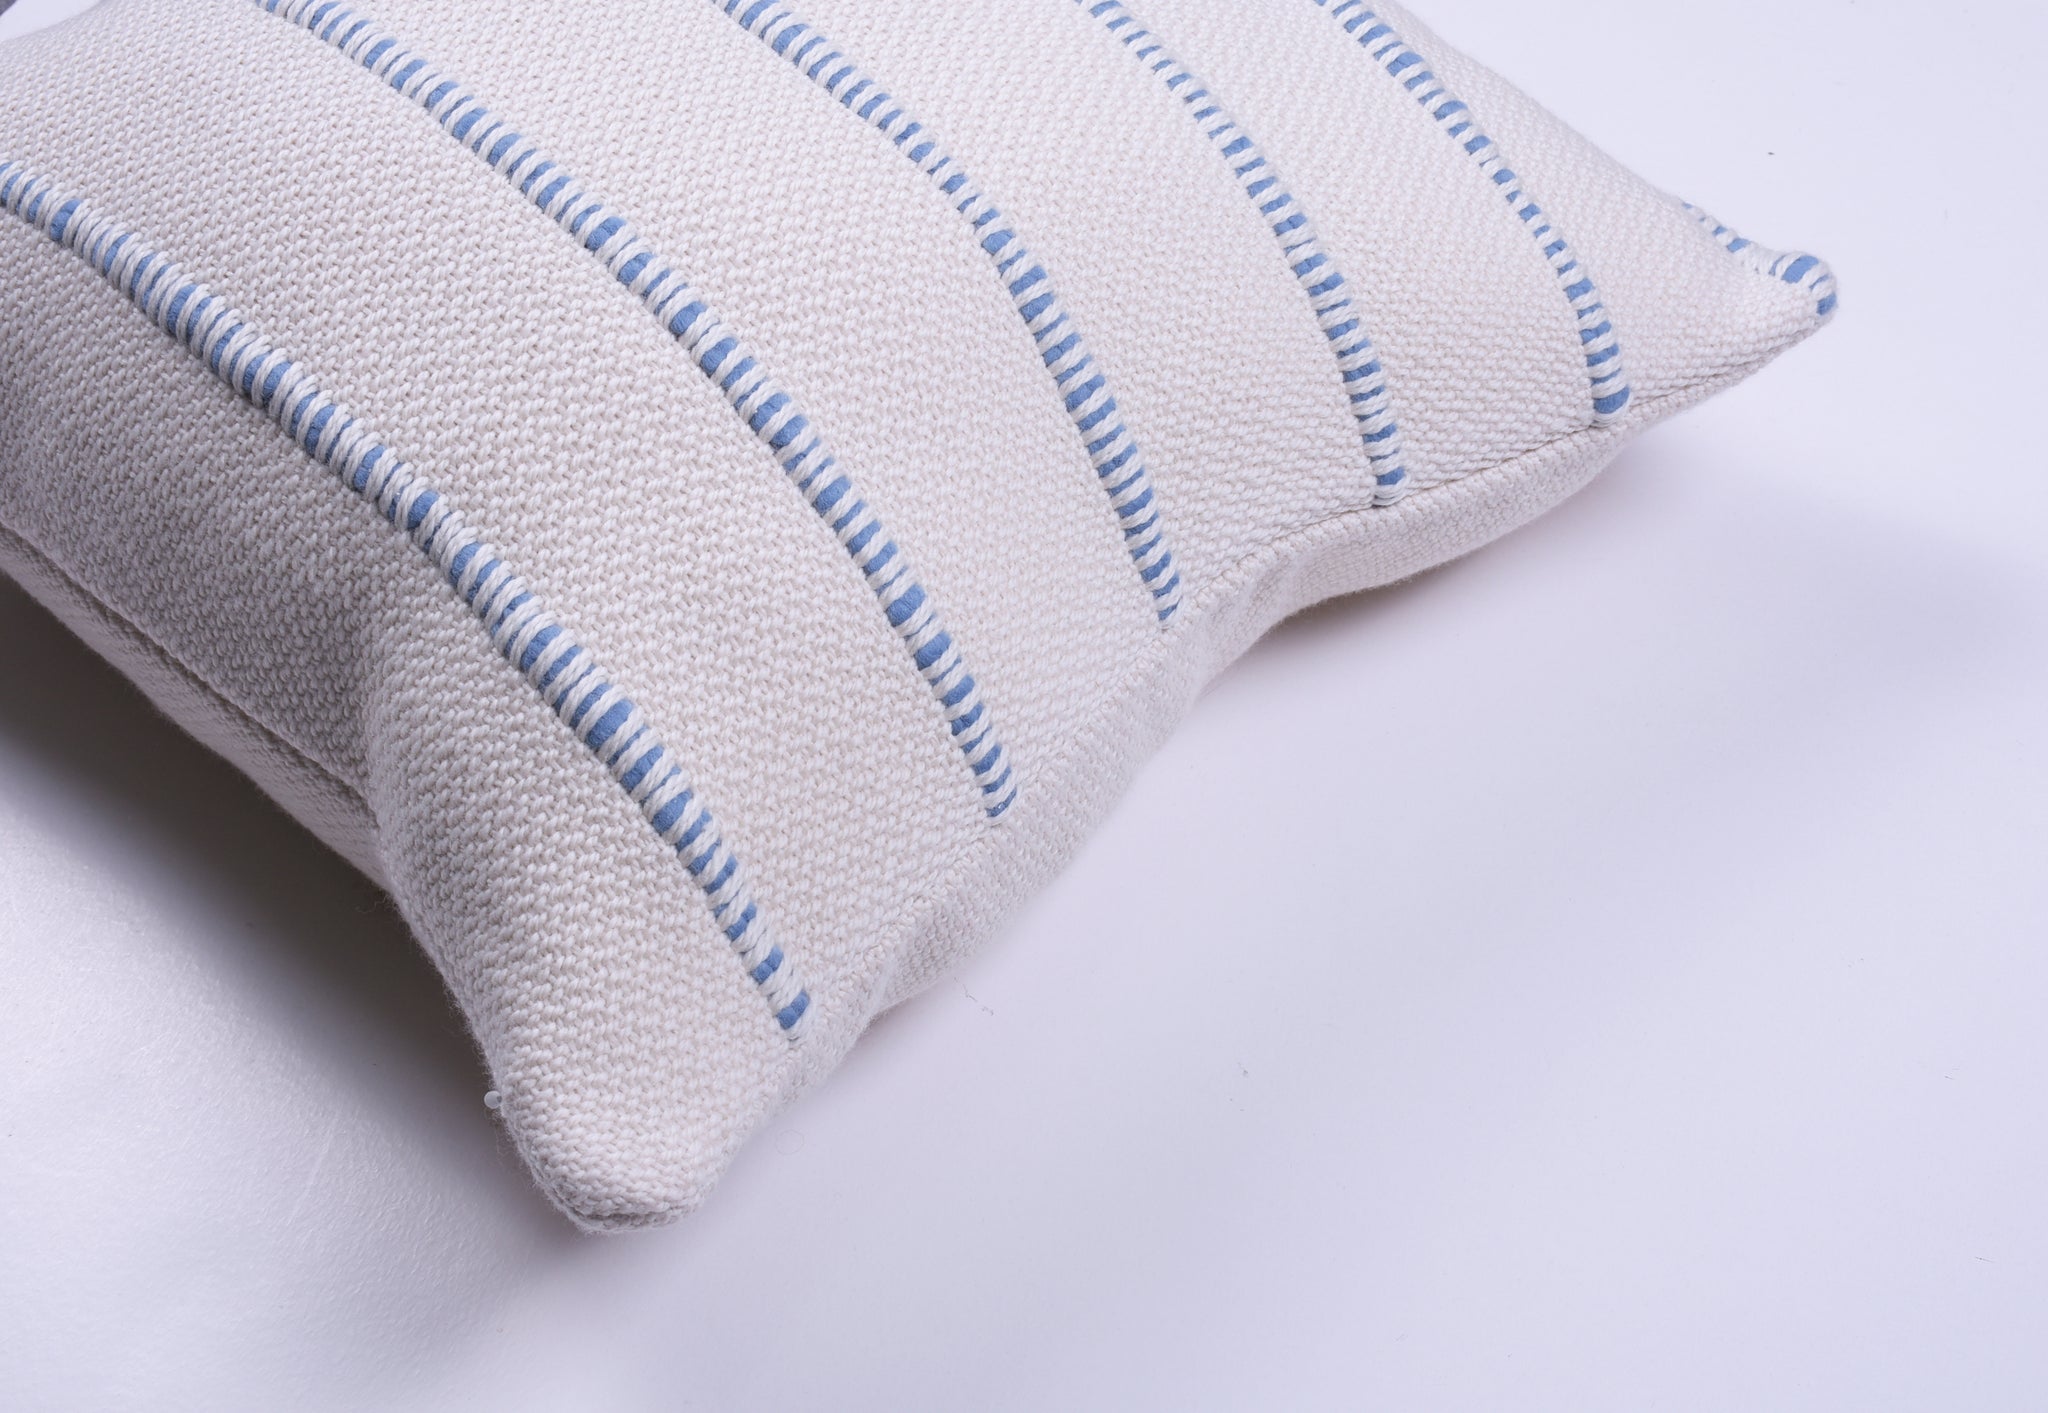 Blue Multi Striped Lumbar Pillow